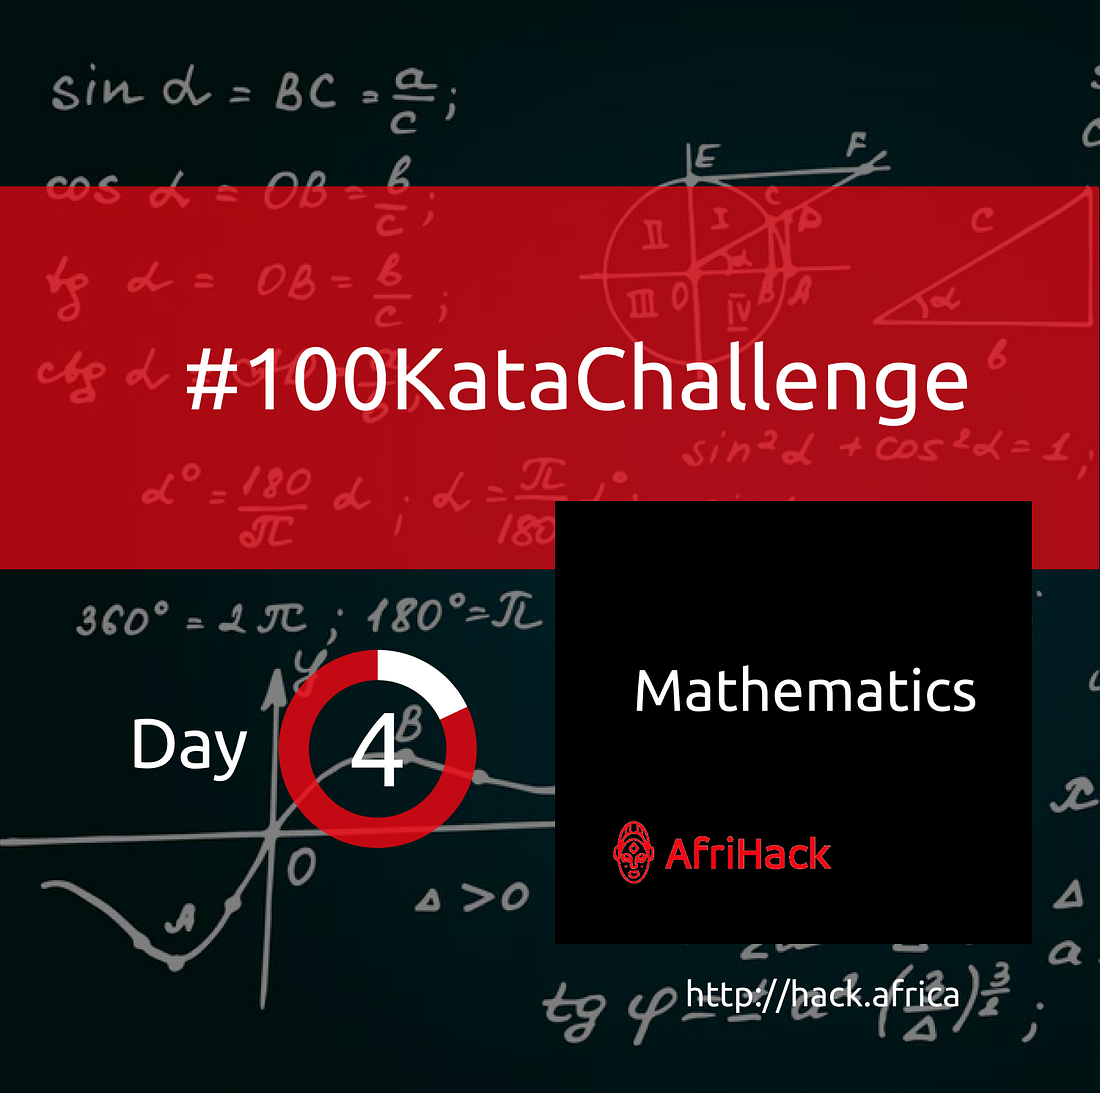 Mathematics Challenge Flyer